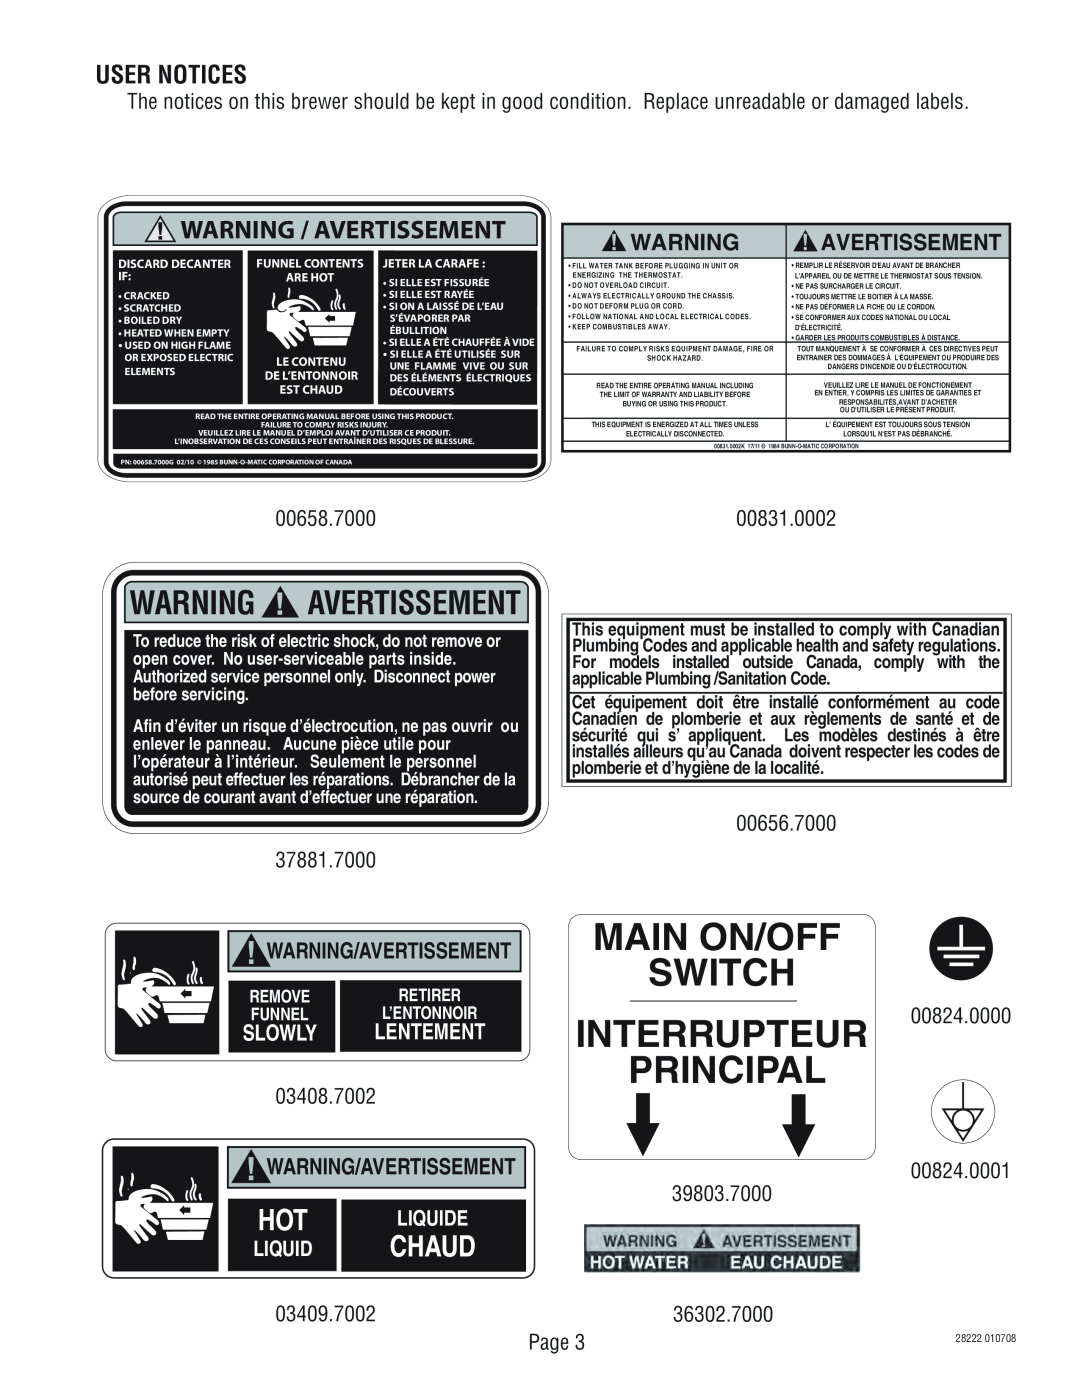 Bunn 28222.70006 Main On/Off Switch Interrupteur Principal, User Notices, Warning / Avertissement, Warning/Avertissement 